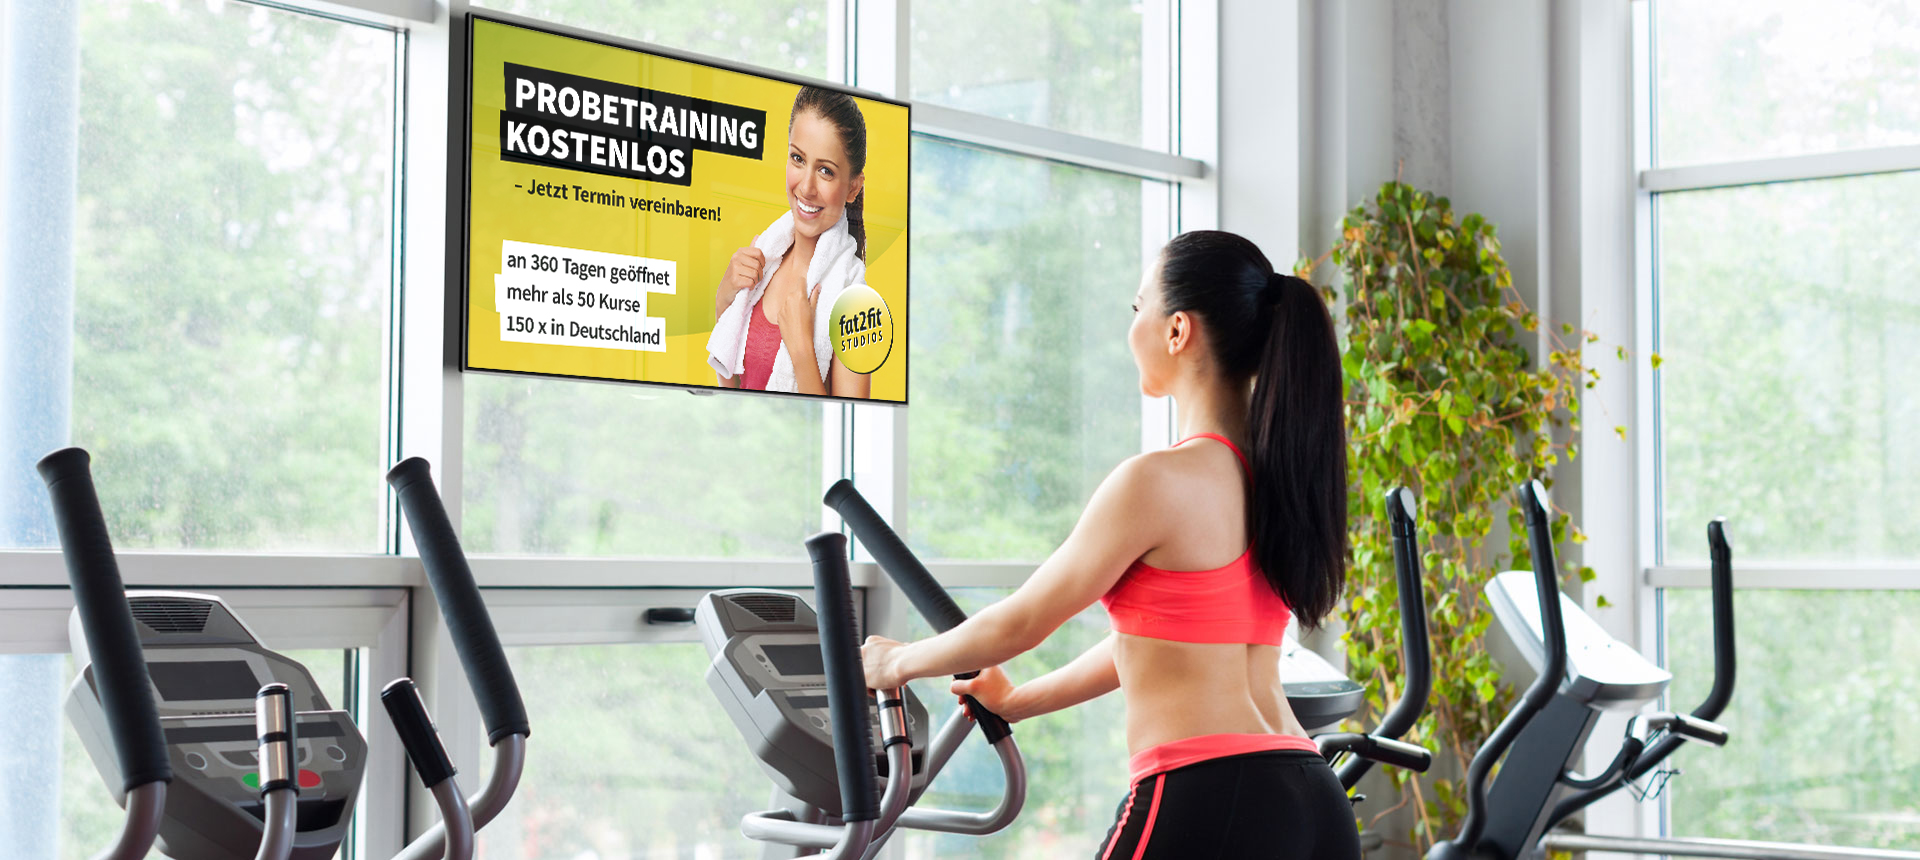 Fitness digital signage